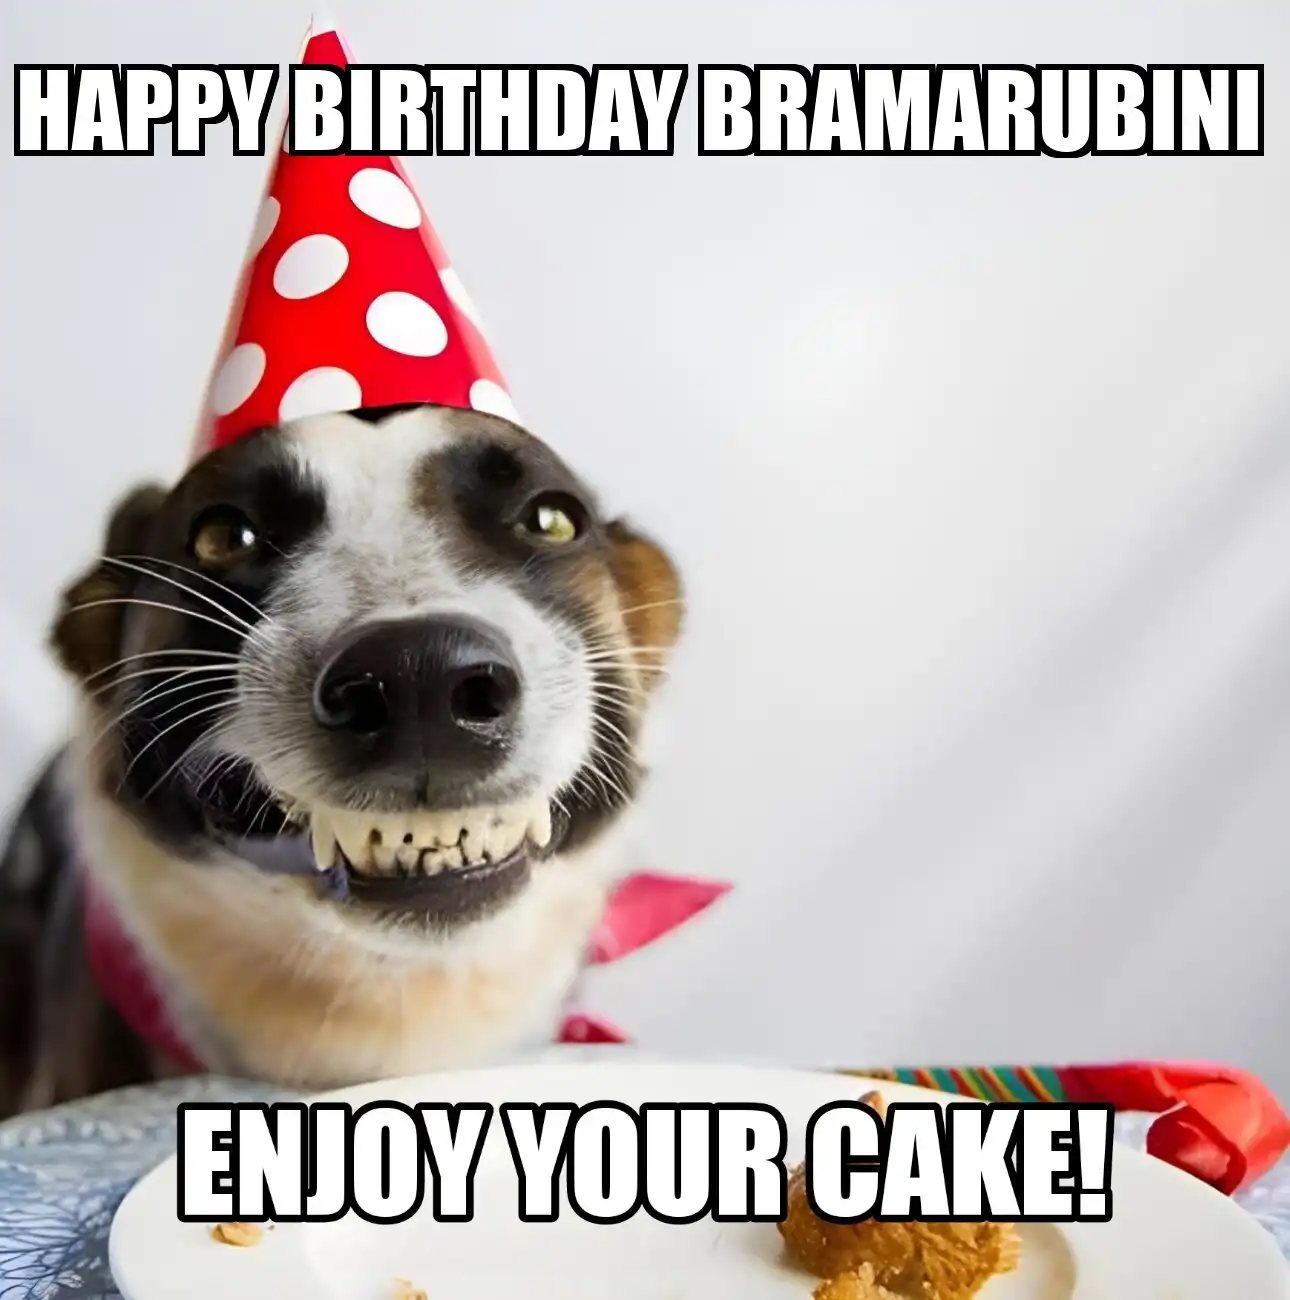 Happy Birthday Bramarubini Enjoy Your Cake Dog Meme